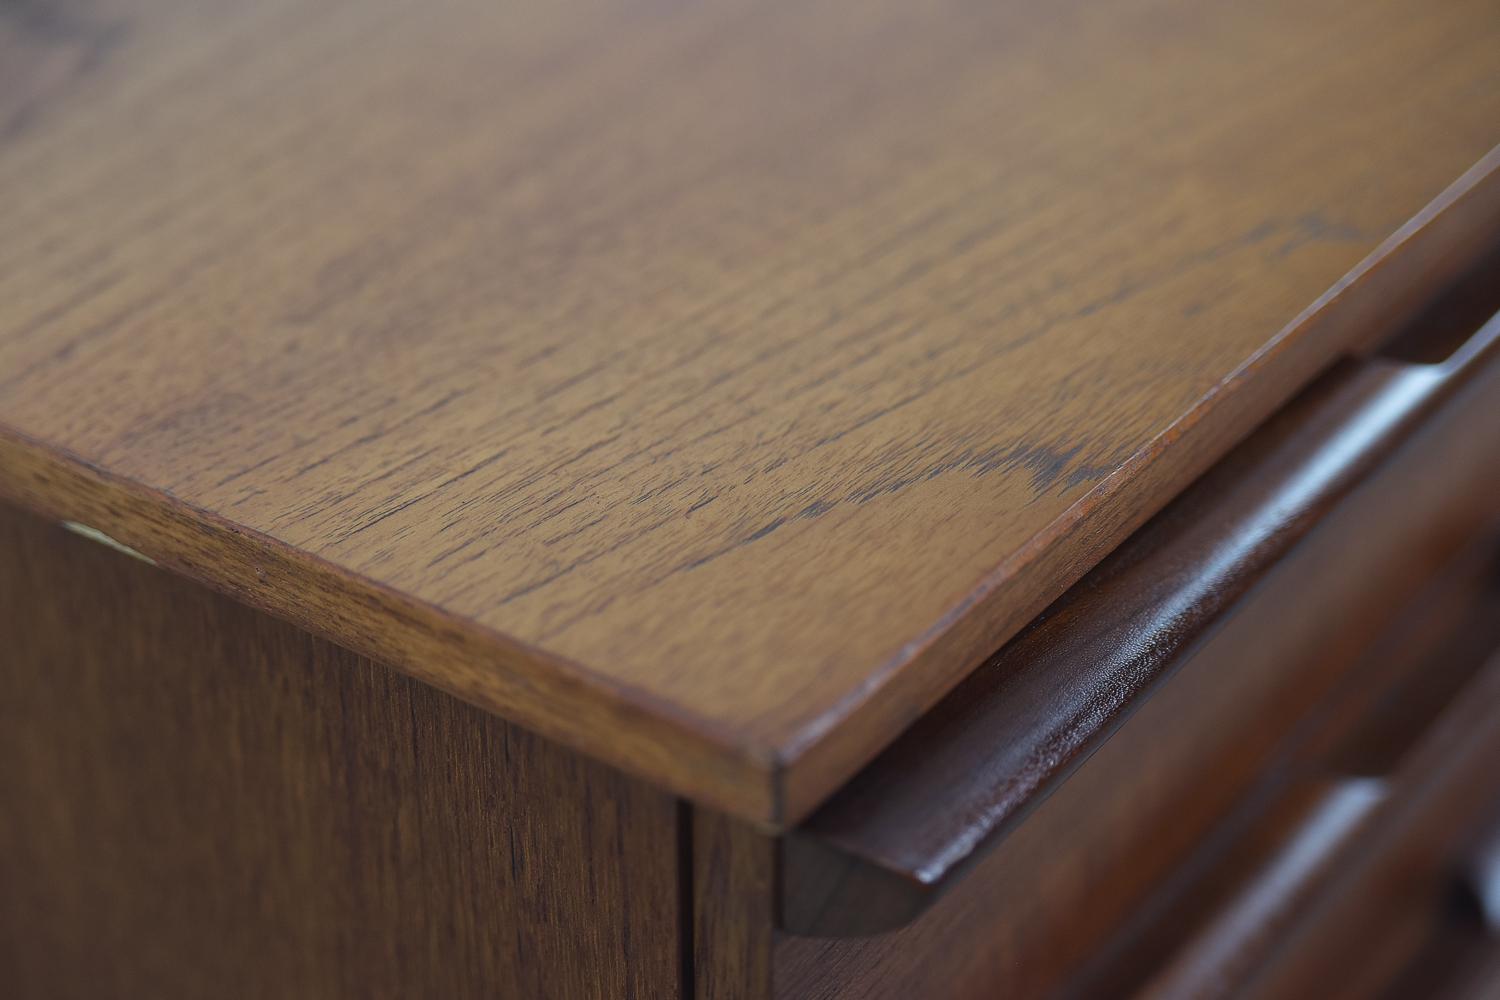 Vintage Midcentury Danish Modern Teak Wood Desk from Avalon, 1960s For Sale 5